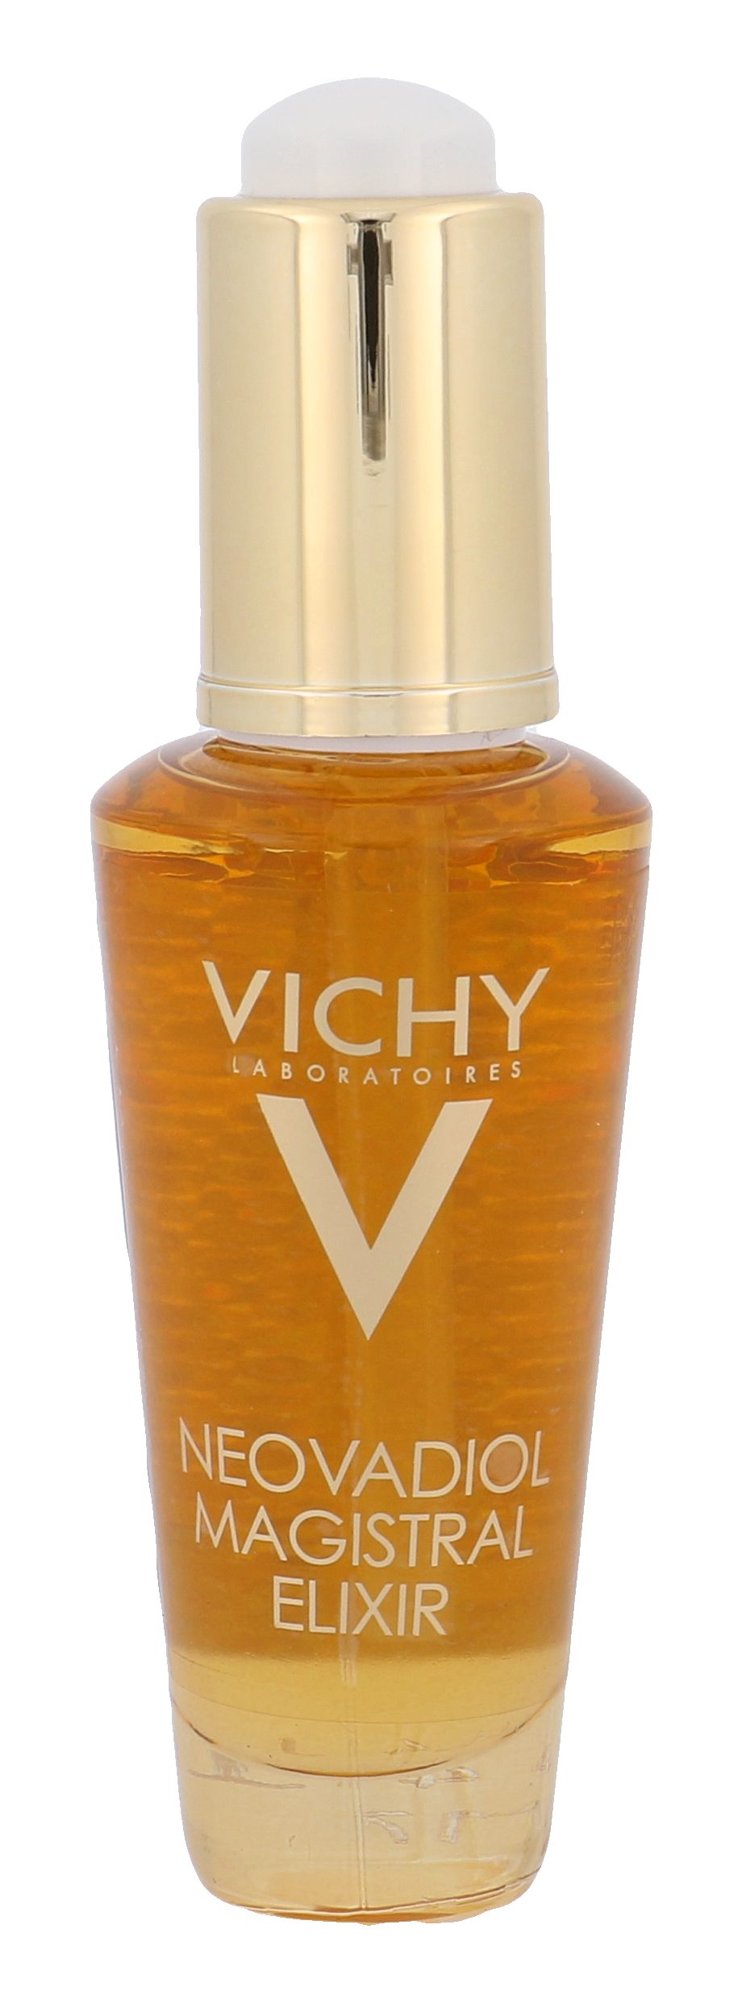 Vichy Neovadiol Magistral Elixir Veido serumas